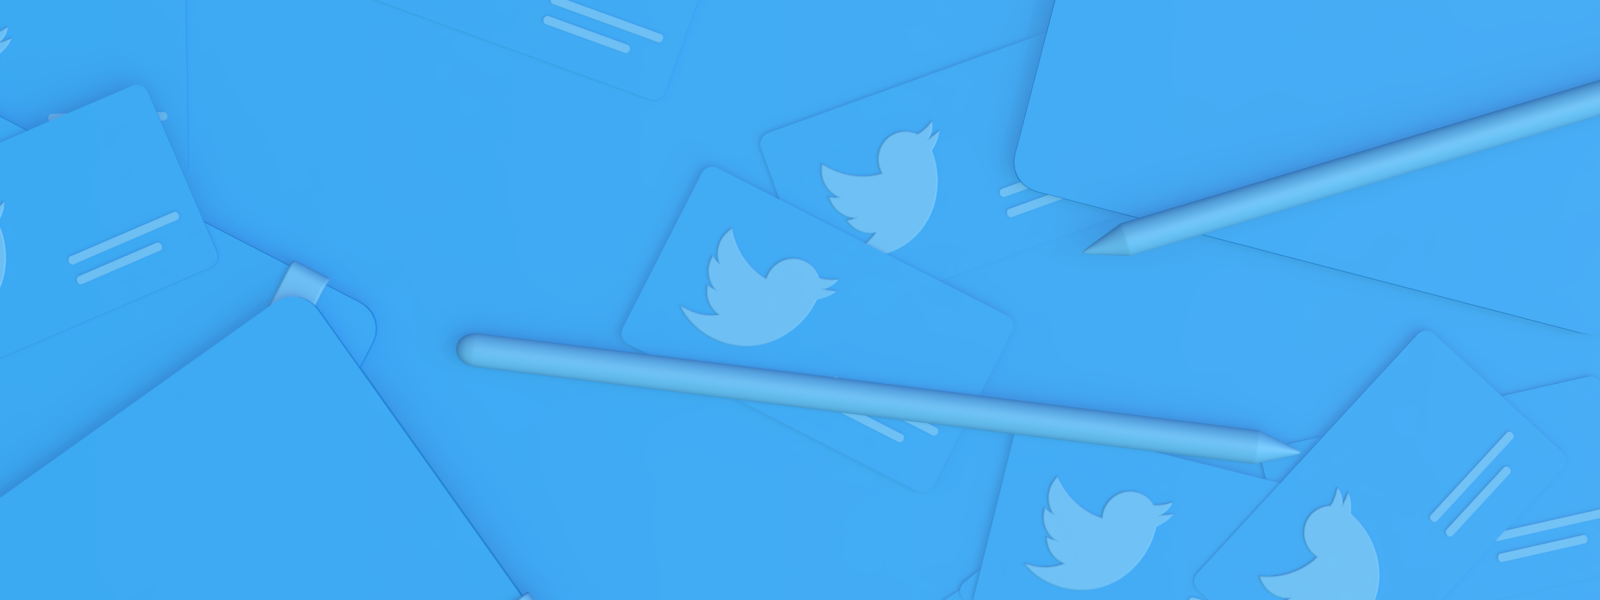 A short history of Twitters logo design - Logo Design Blog | Logobee